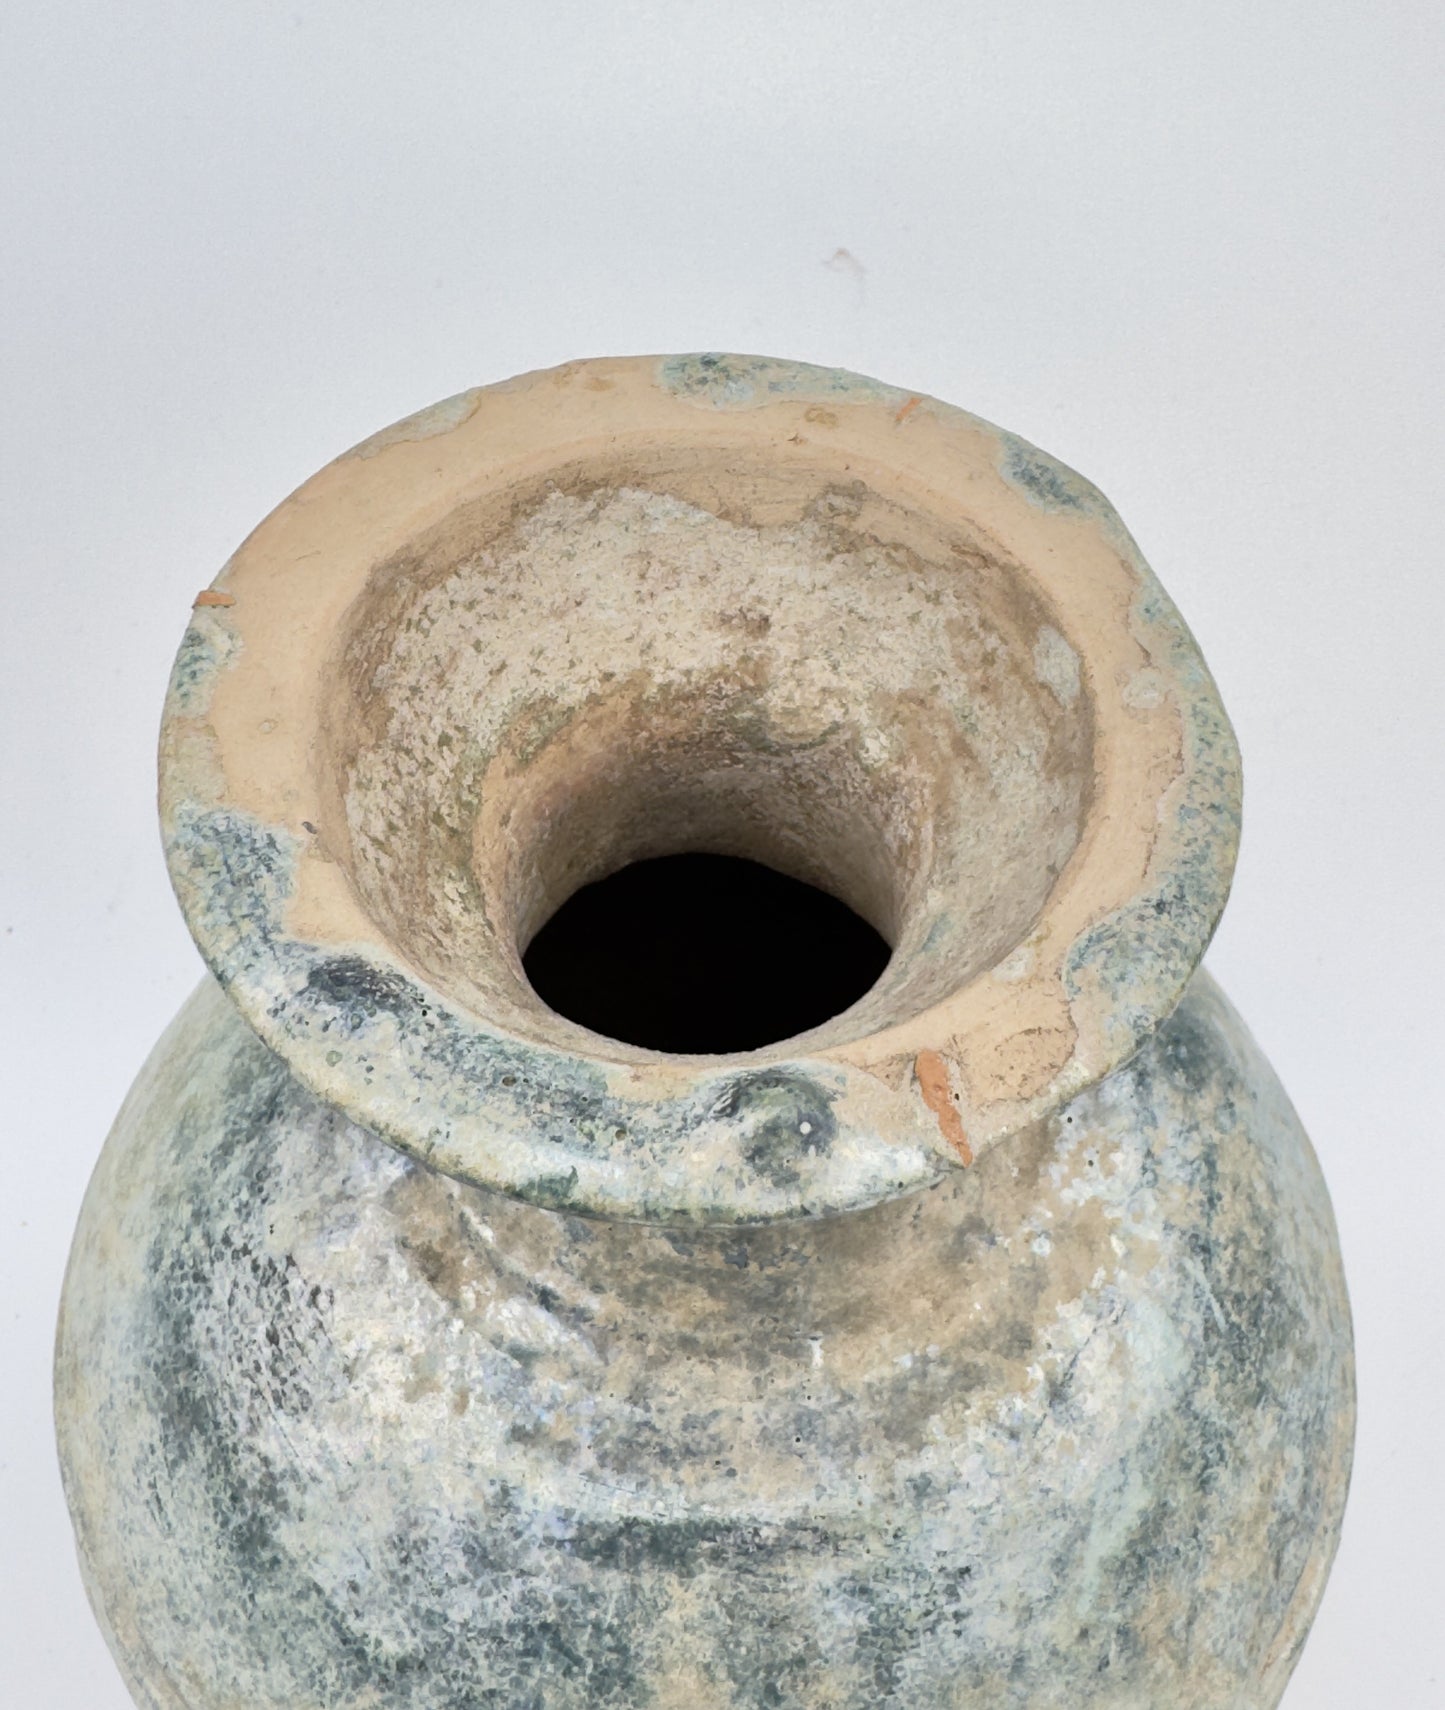 Hu Shape Green-Glazed Vase, Han Dynasty